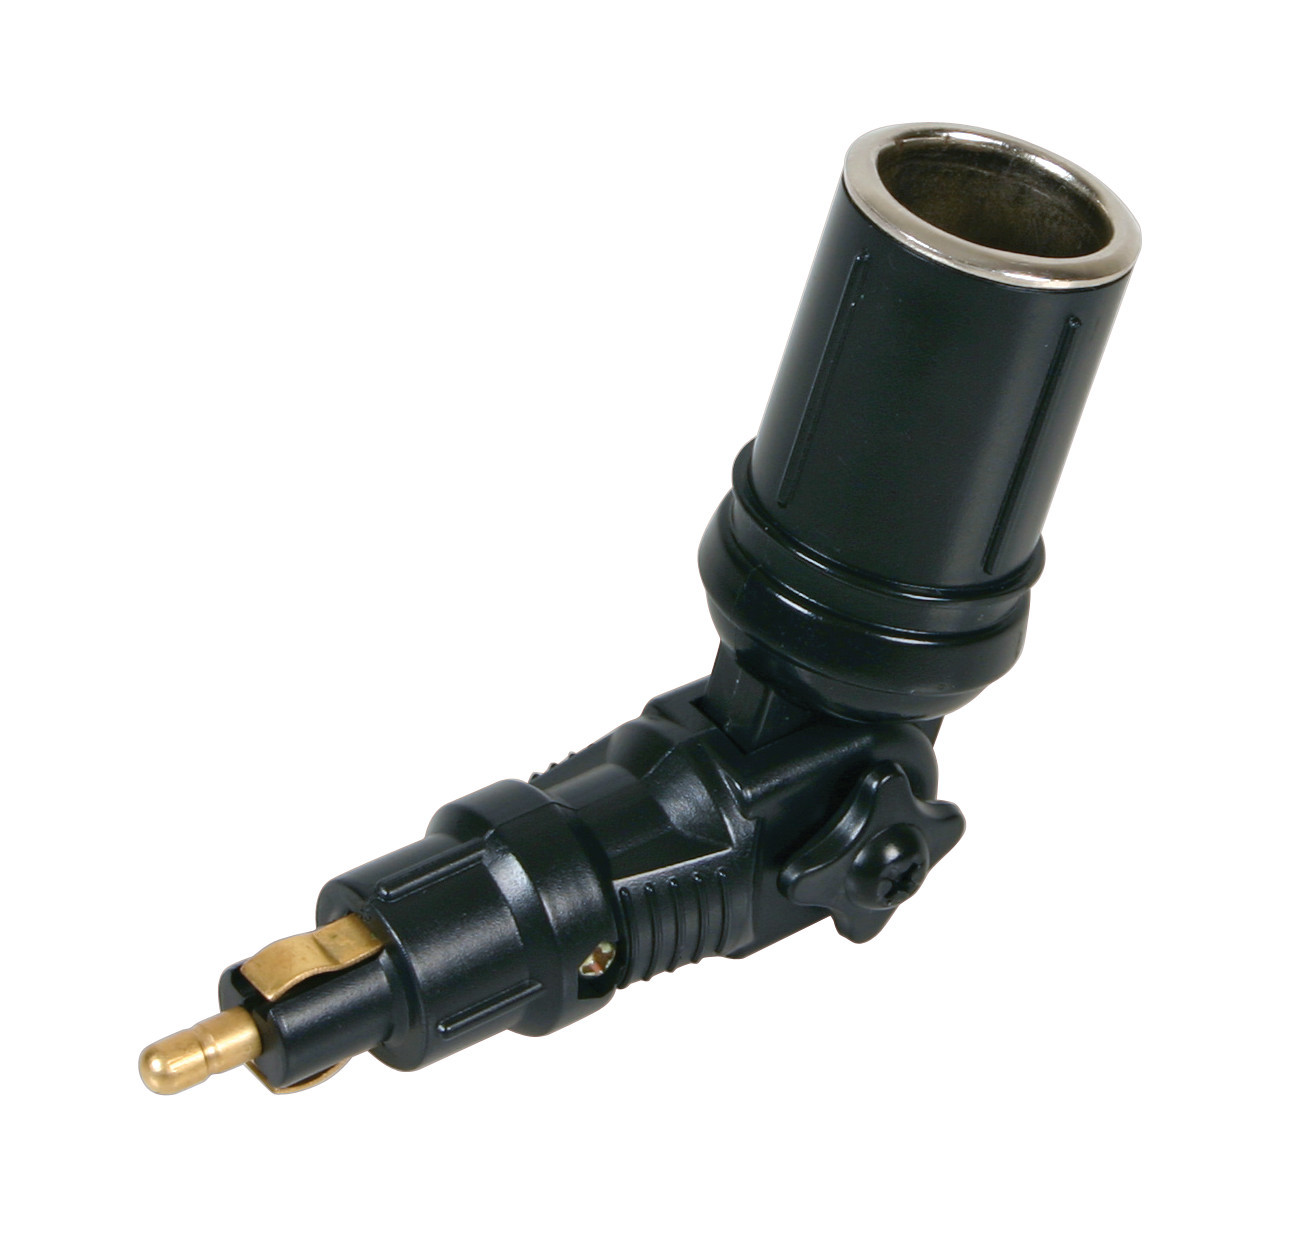 Adapter socket, 120° swivel joint 12/24V-Resealed, thumb